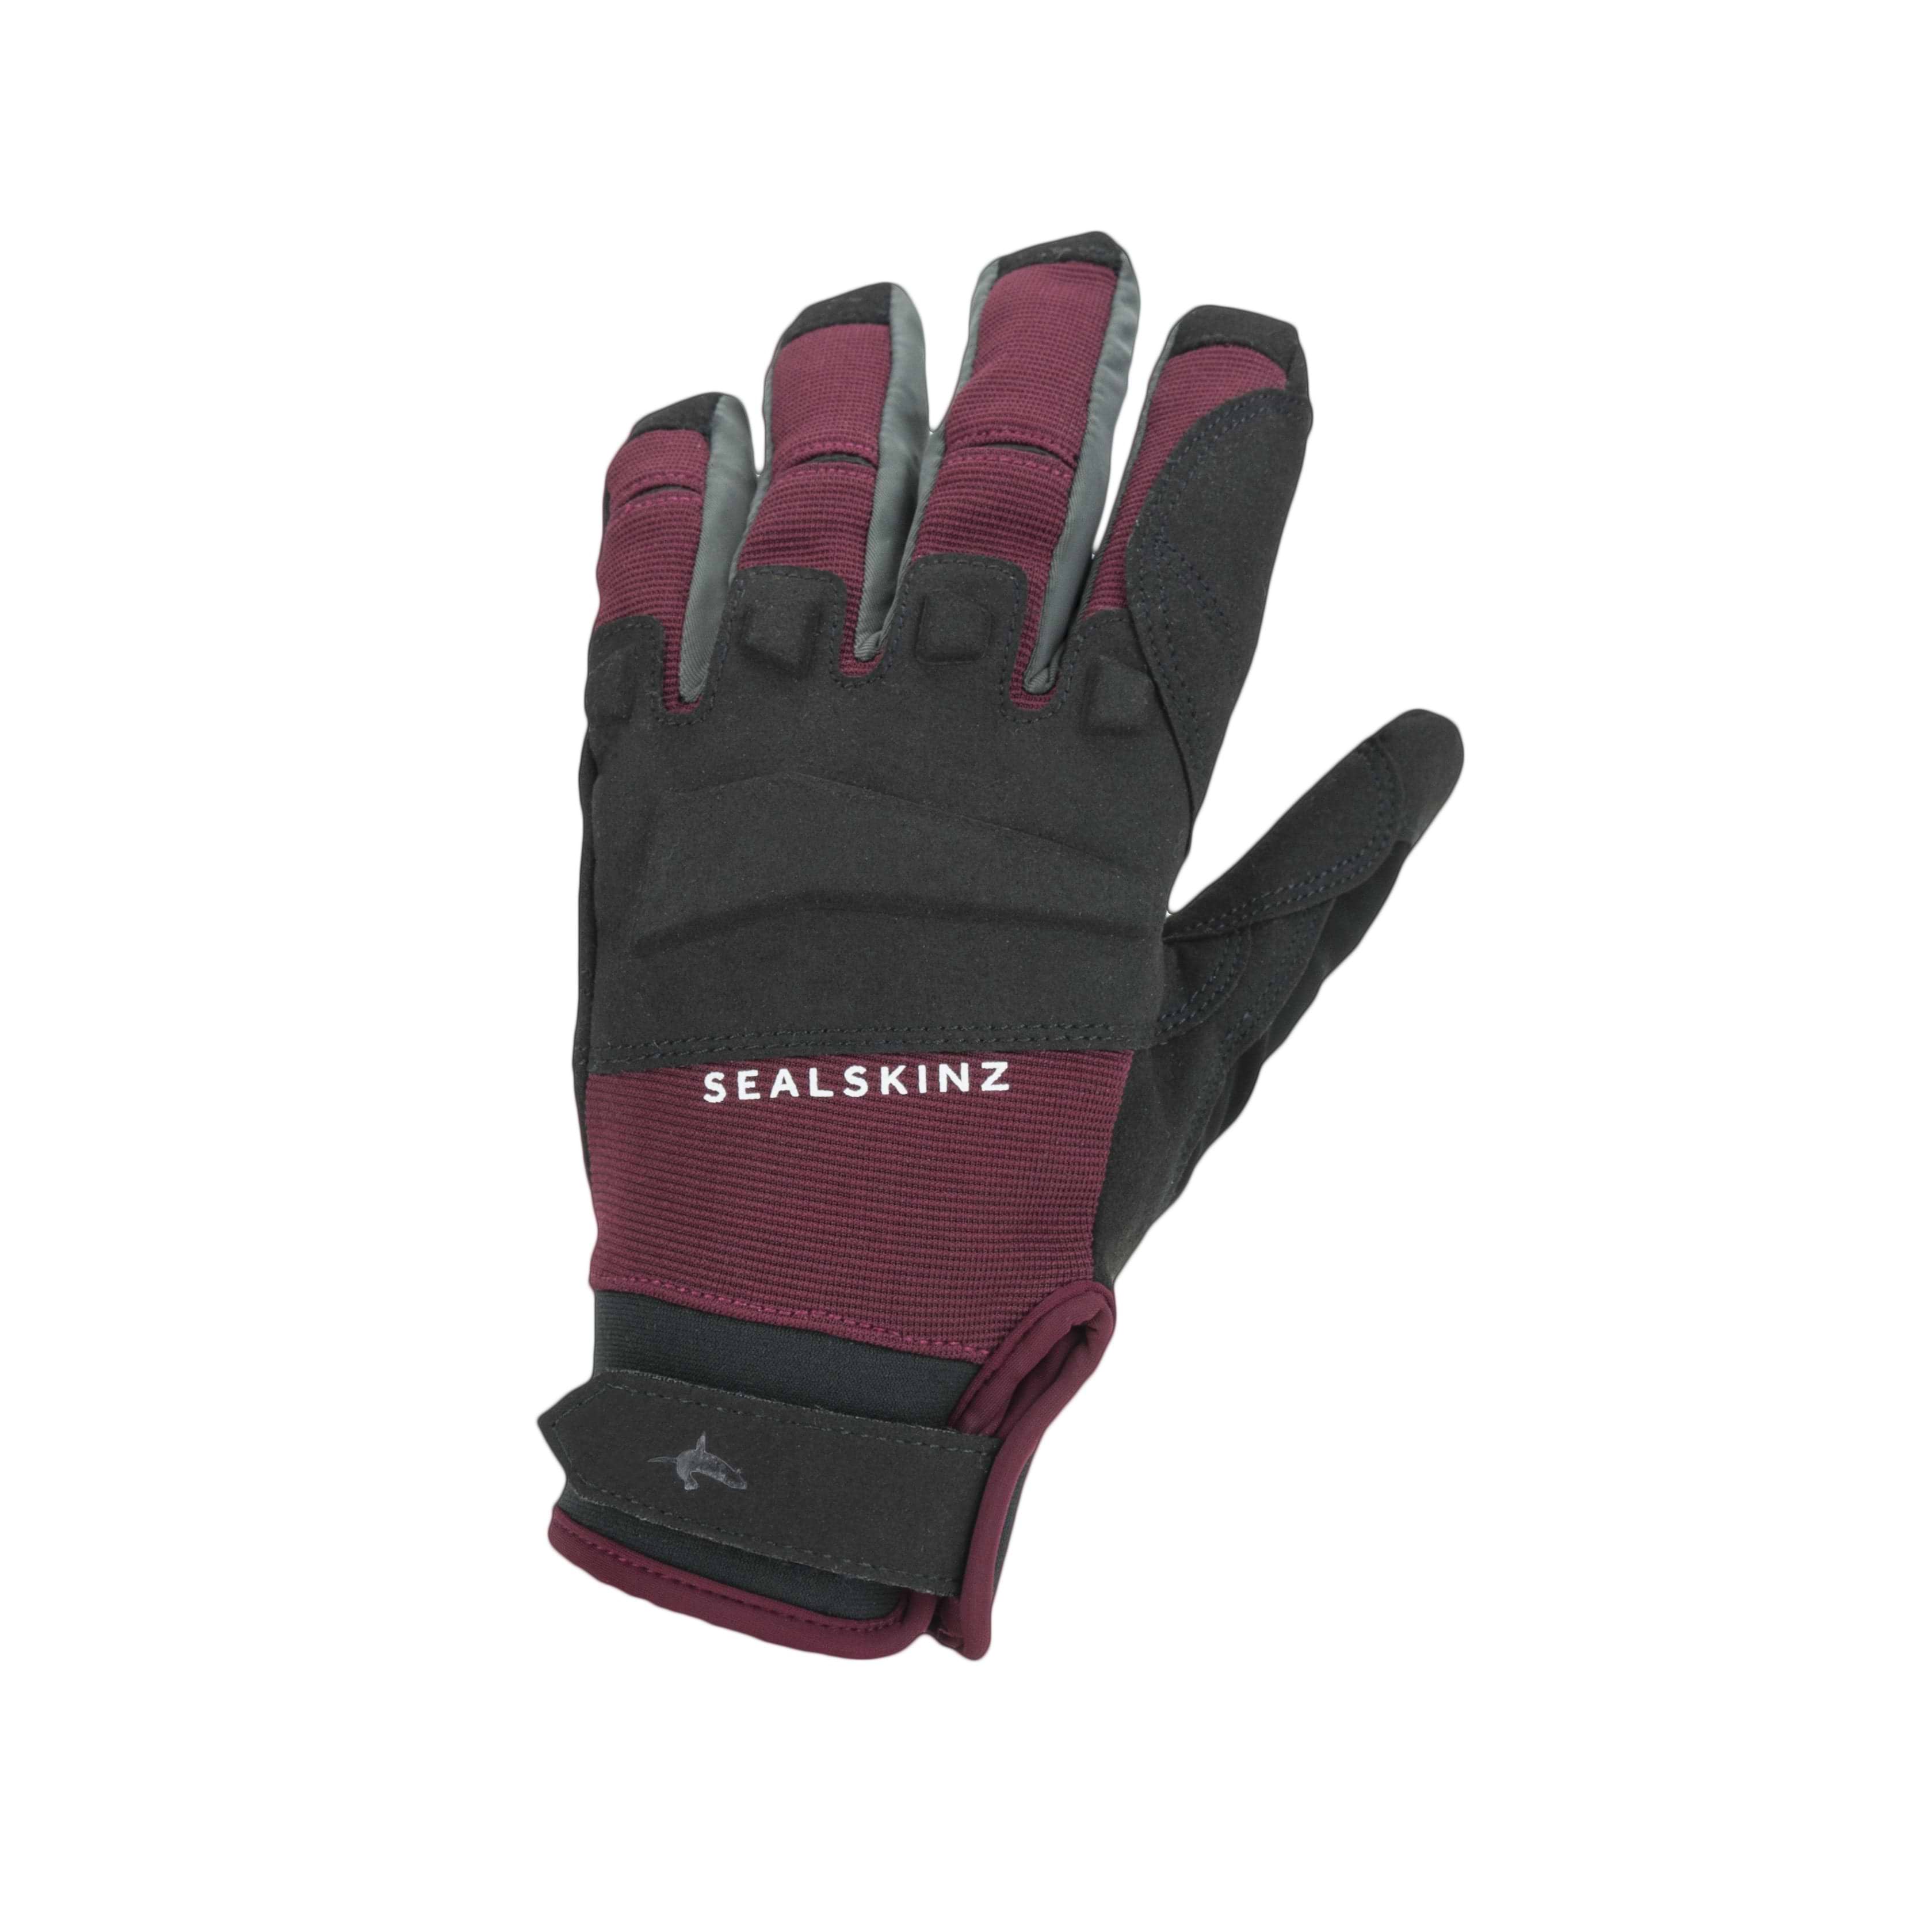 USA Reflective Sealskinz Weather Marsham Glove - Cycle Waterproof – Cold